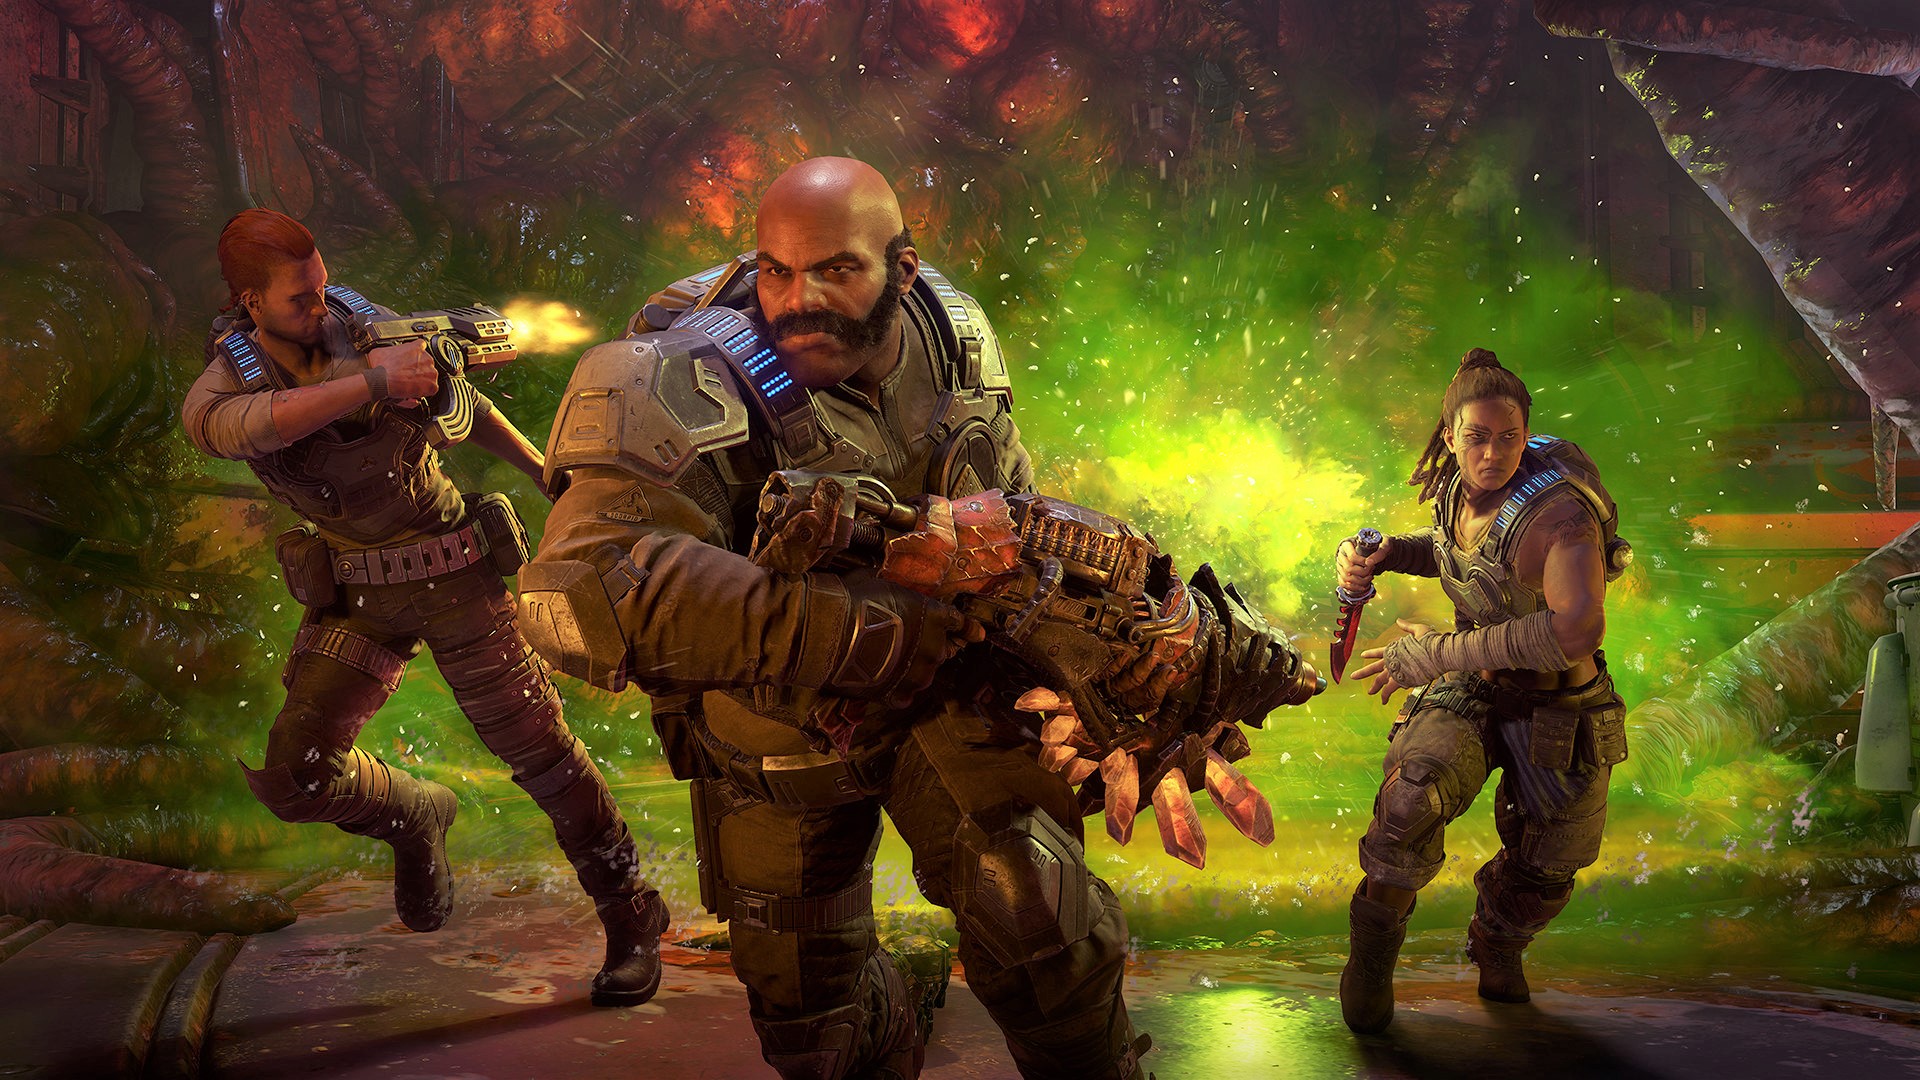 GEARS OF WAR 5 Official Trailer (2019) E3 2018 Game HD 